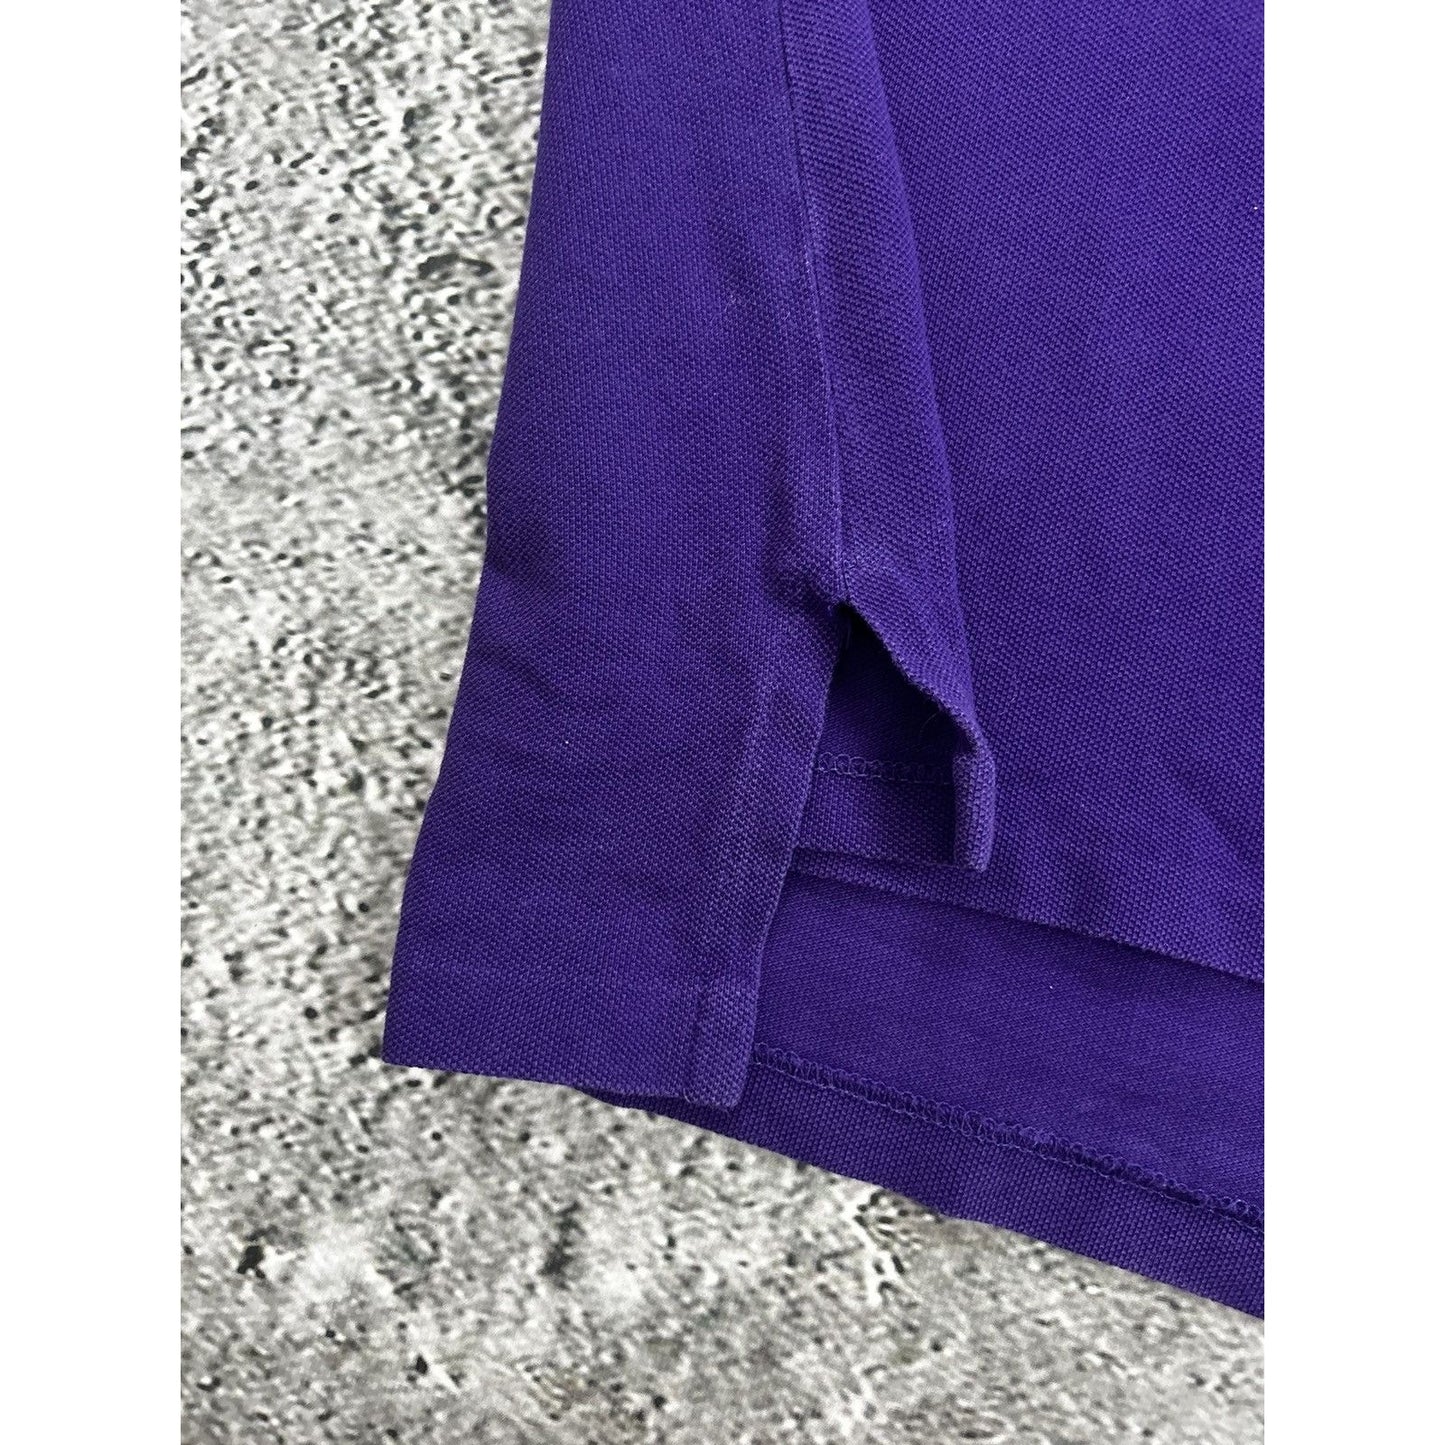 Chief Keef Polo Ralph Lauren vintage purple T-shirt big pony